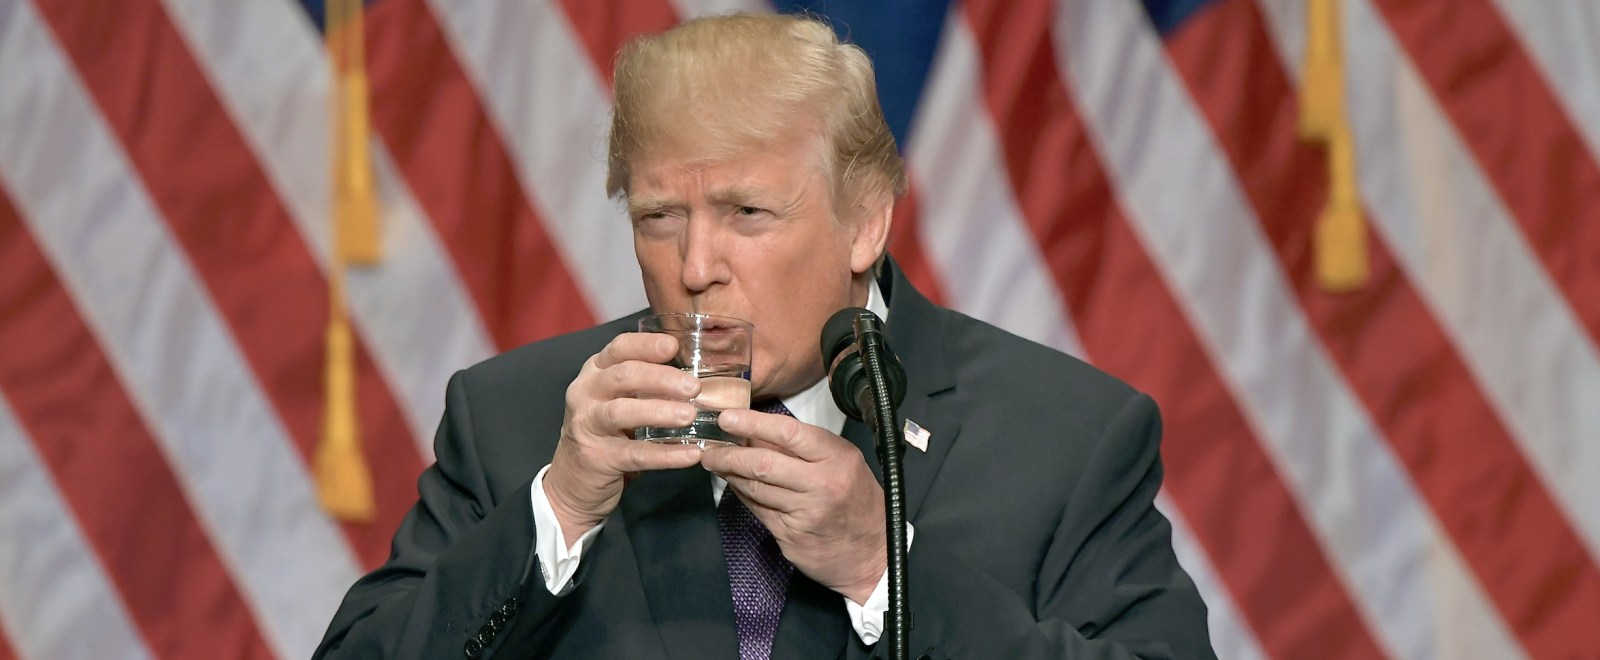 trump-drinking.jpg